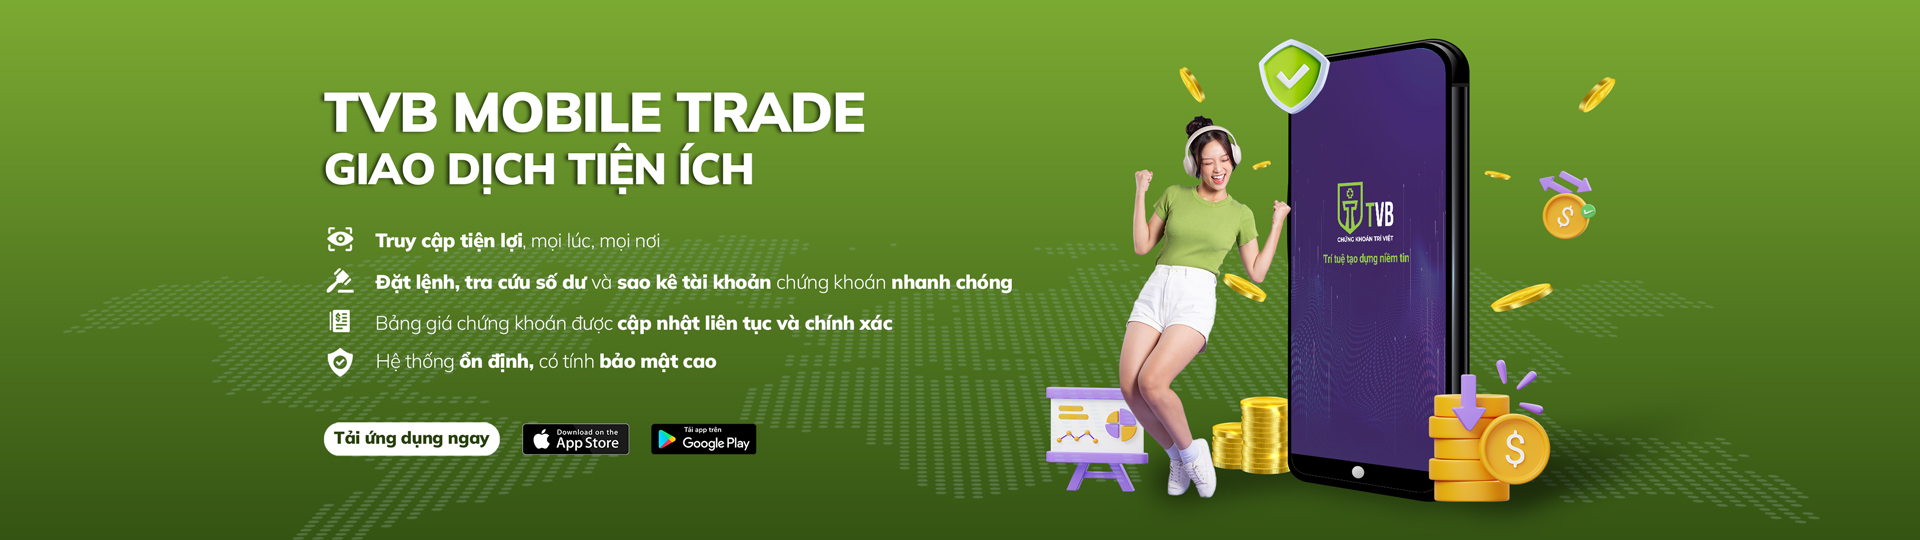 TVB mobile trade